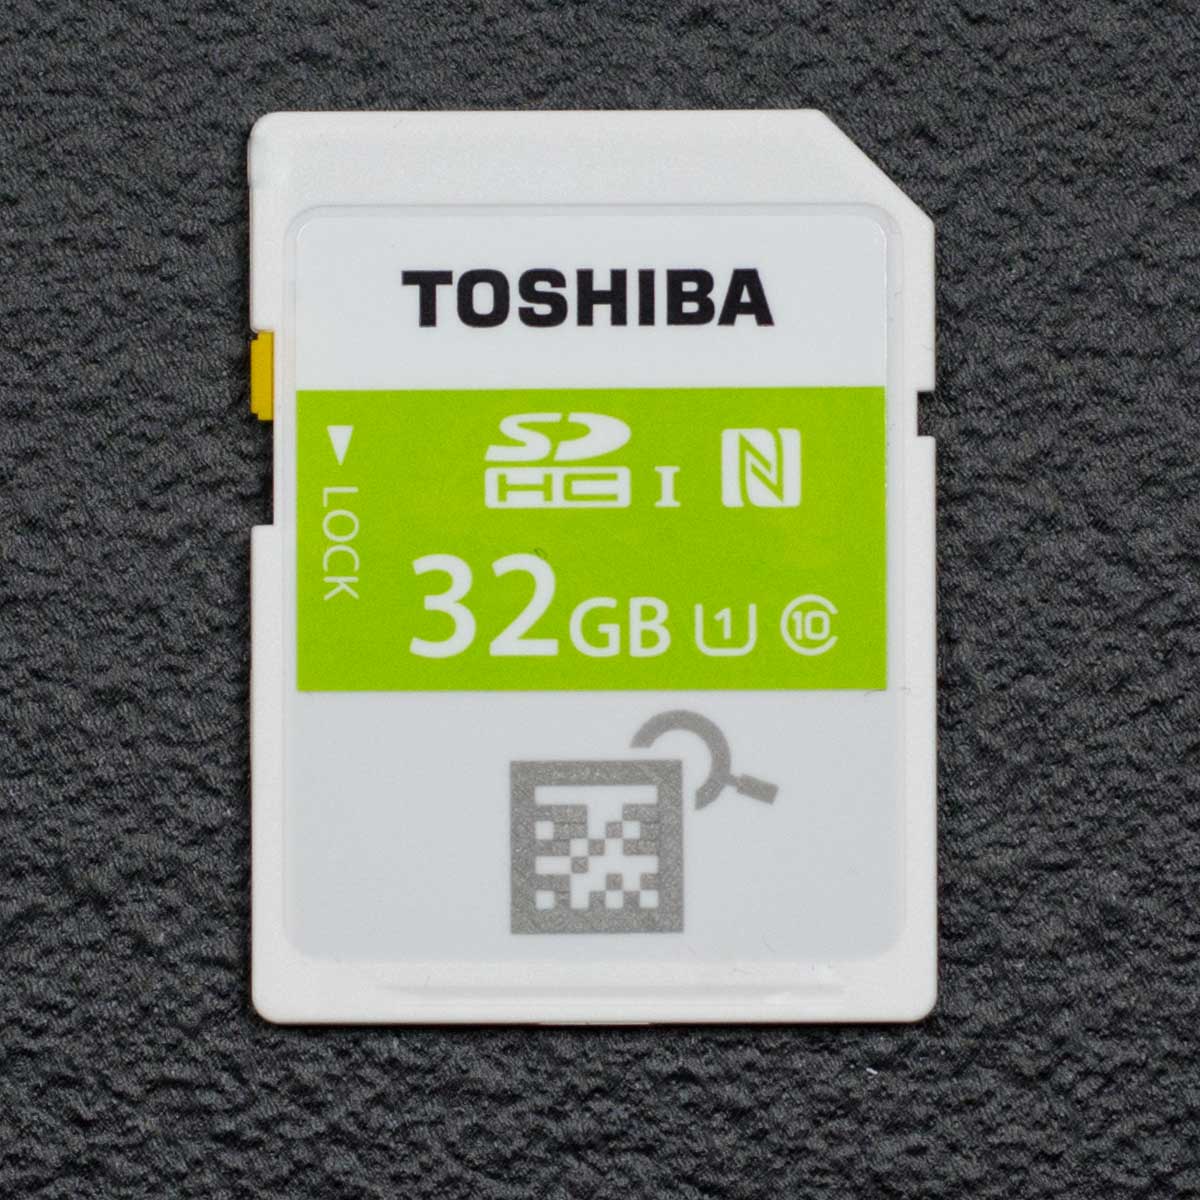 Обзор SDHC карты памяти TOSHIBA SD-T032NFC объемом 32 ГБ